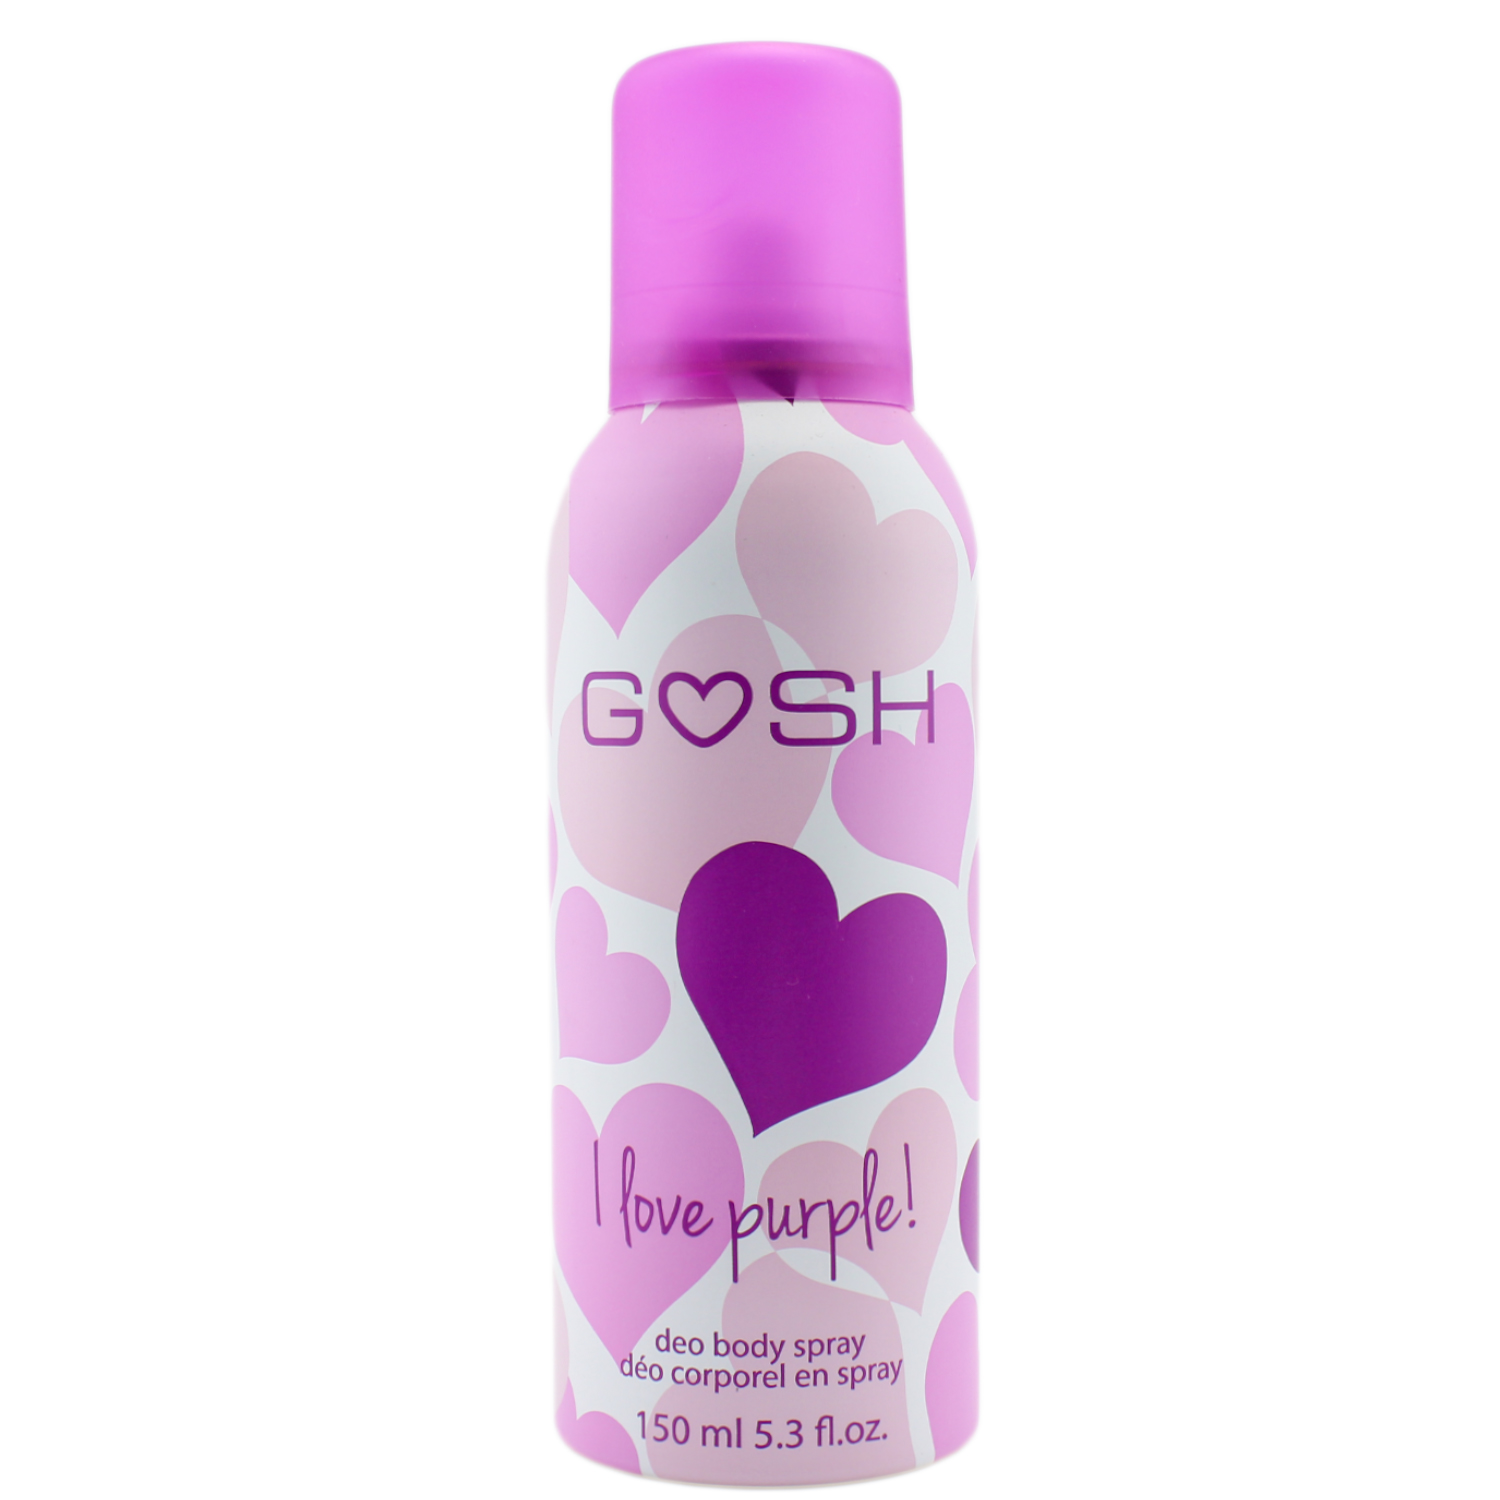 Gosh Copenhagen I Love Purple! Deodorant Spray 150ml